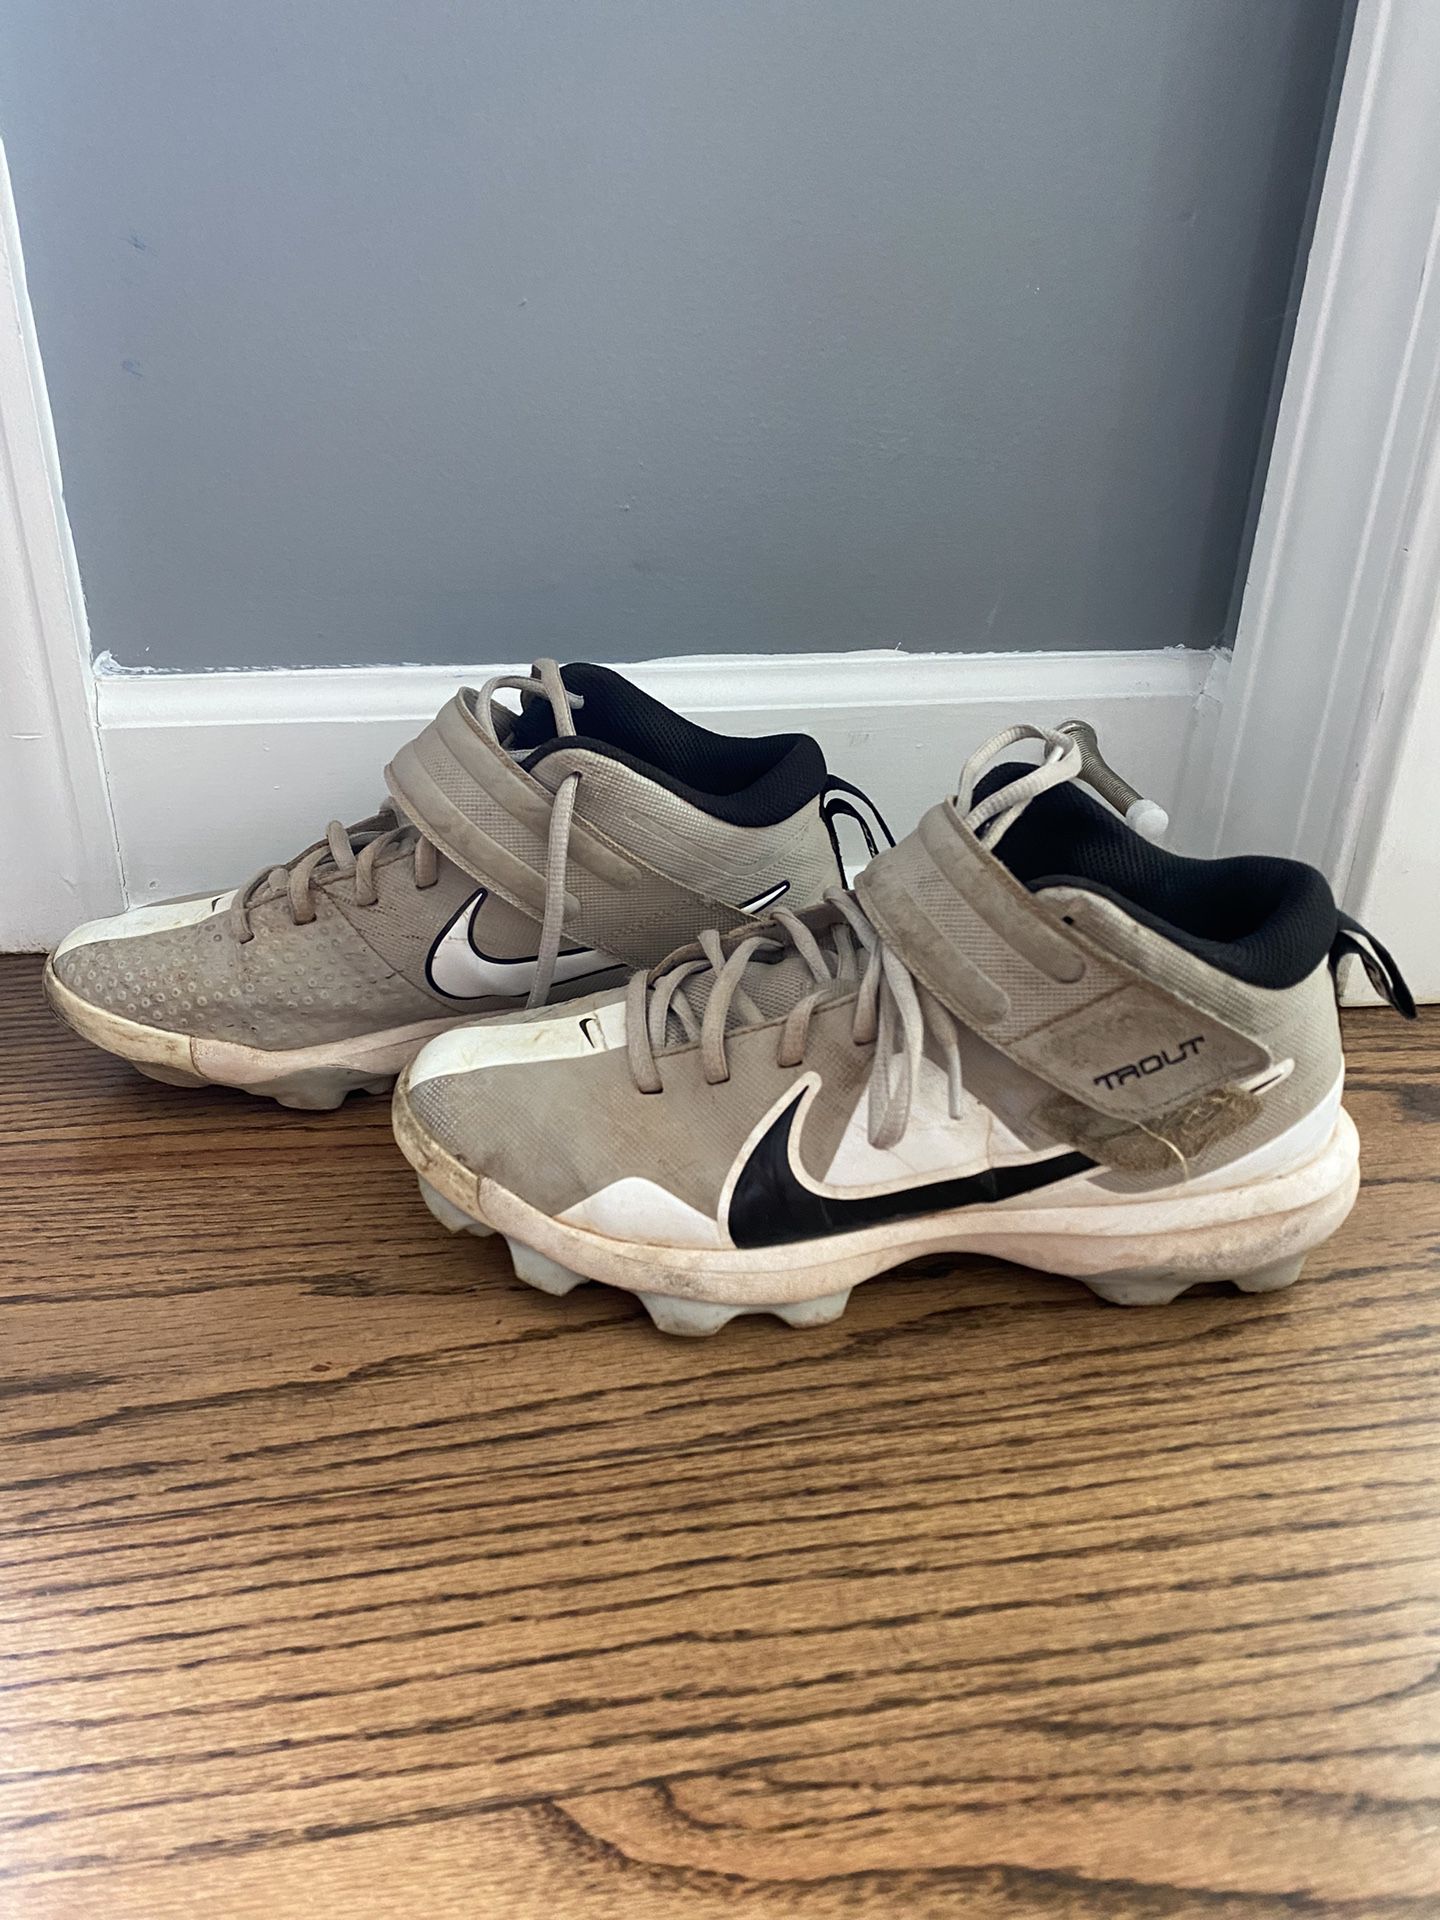 Nike Baseball Cleats - Size 7.5 Men’s 